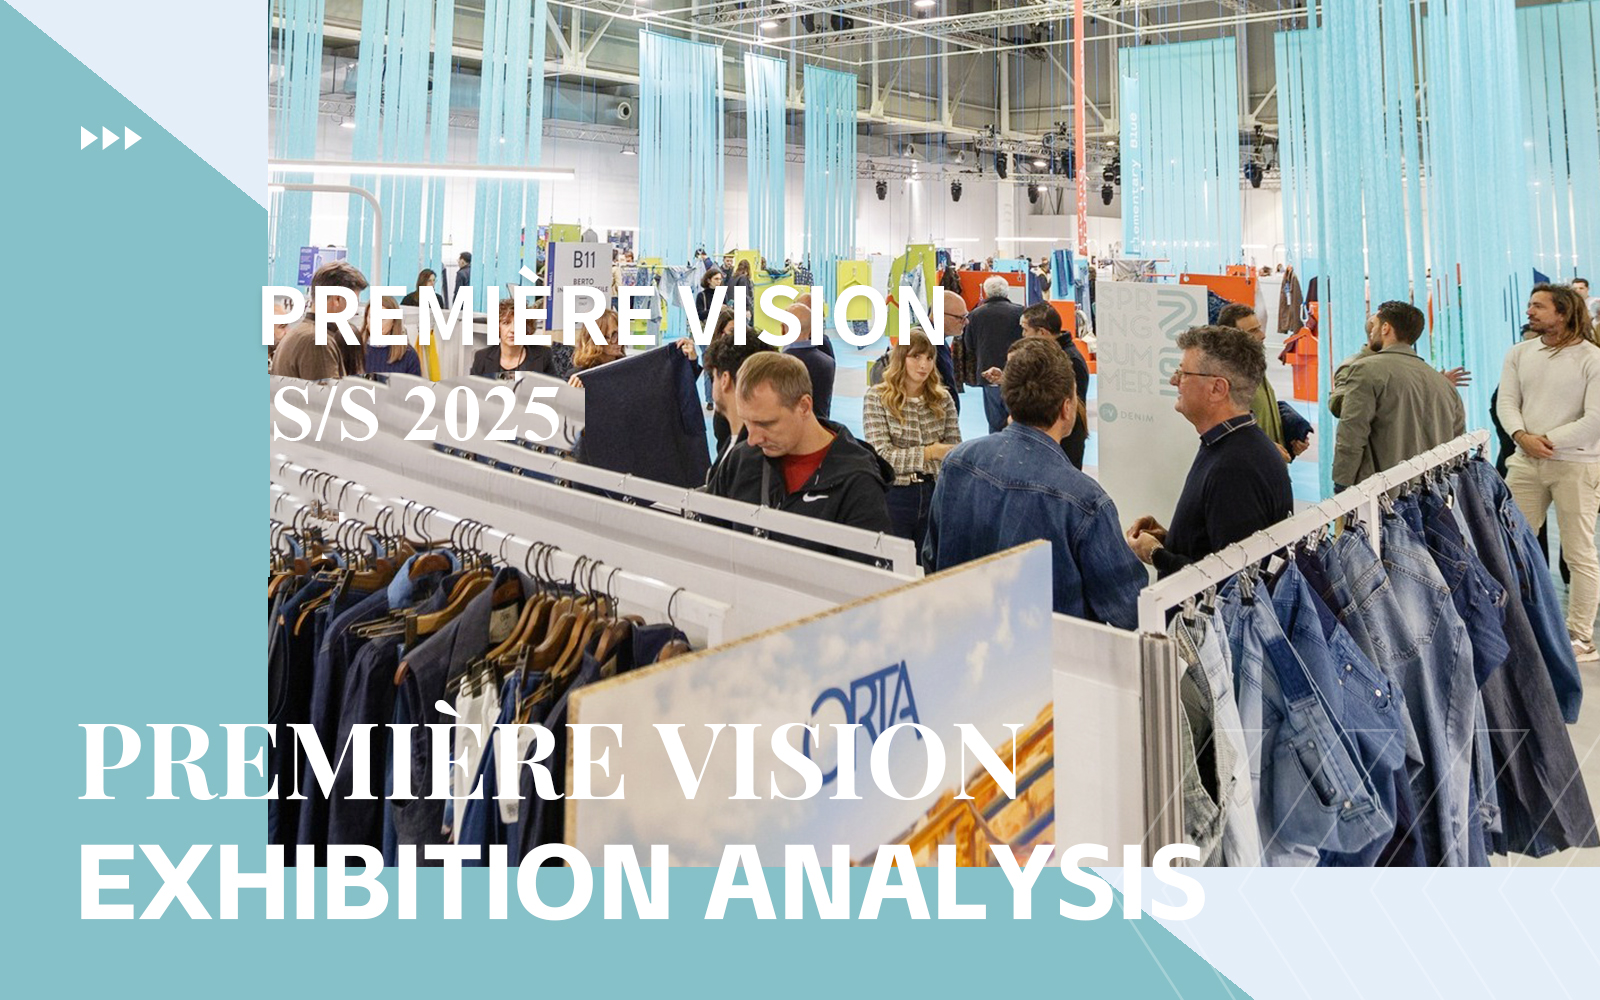 Denim Première Vision -- The Analysis of Milan Denim Trade Fair